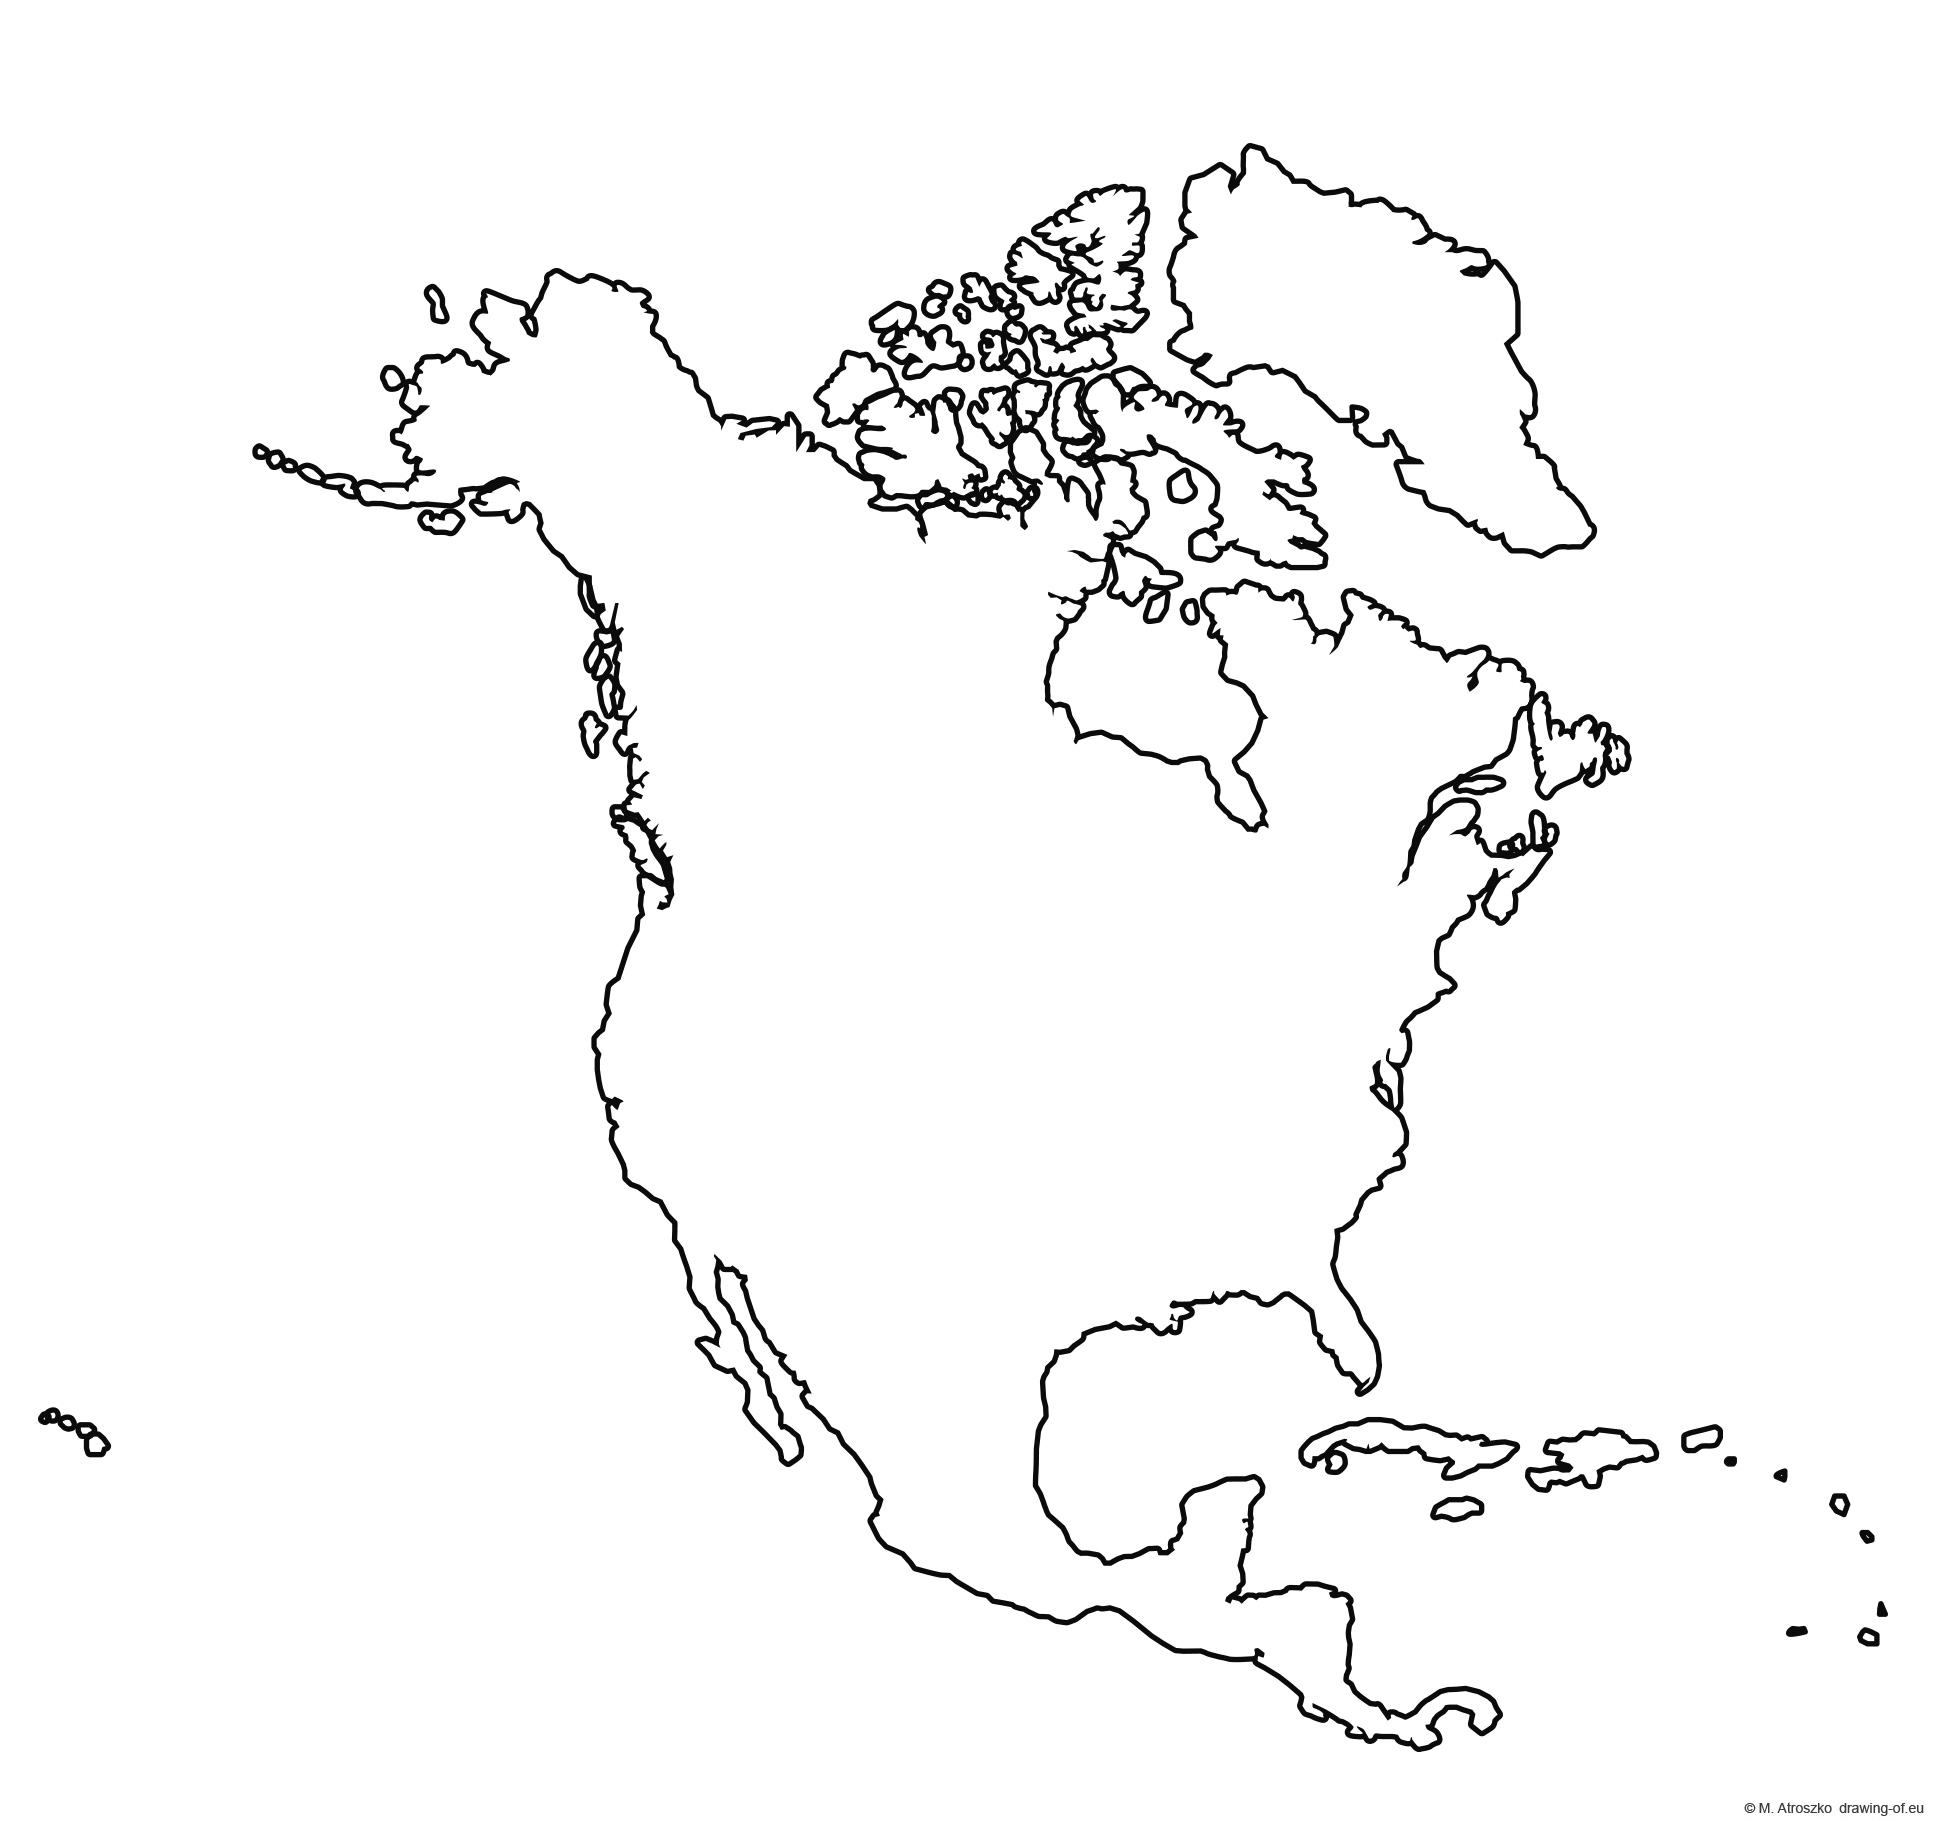 Contour map of North America